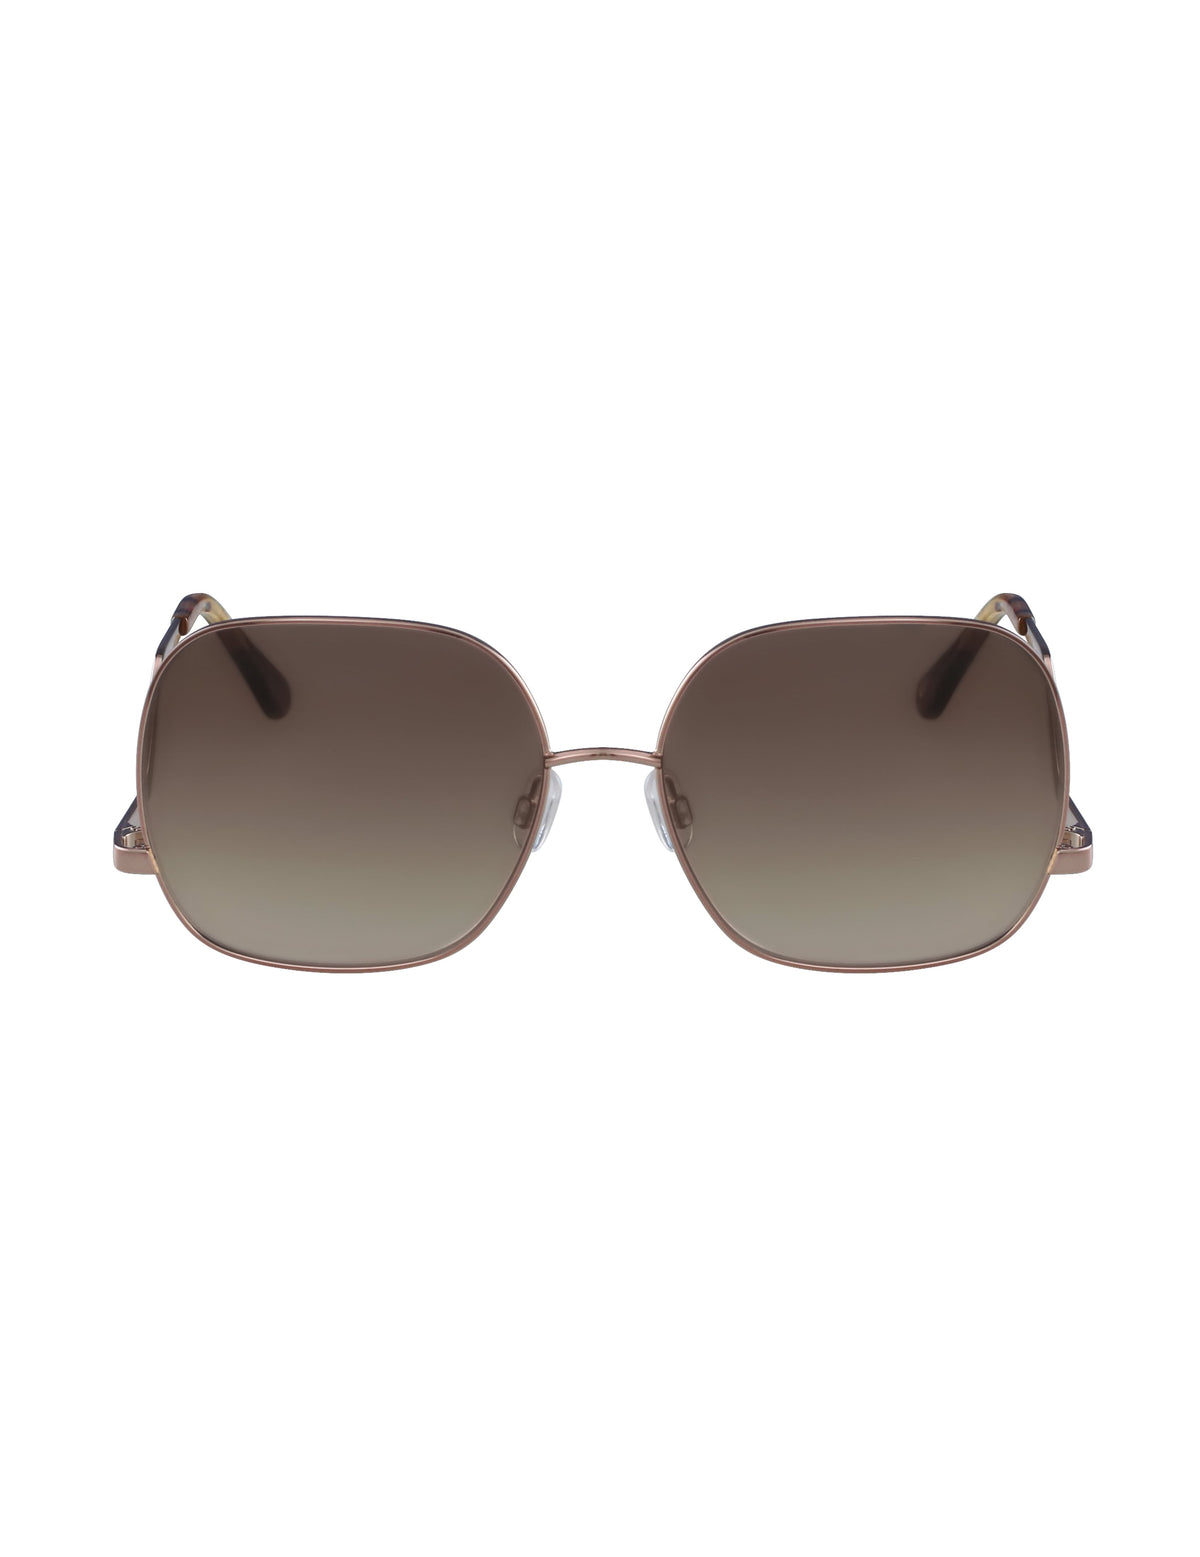 Anne Klein Rose Gold Metal Square Frame Sunglasses